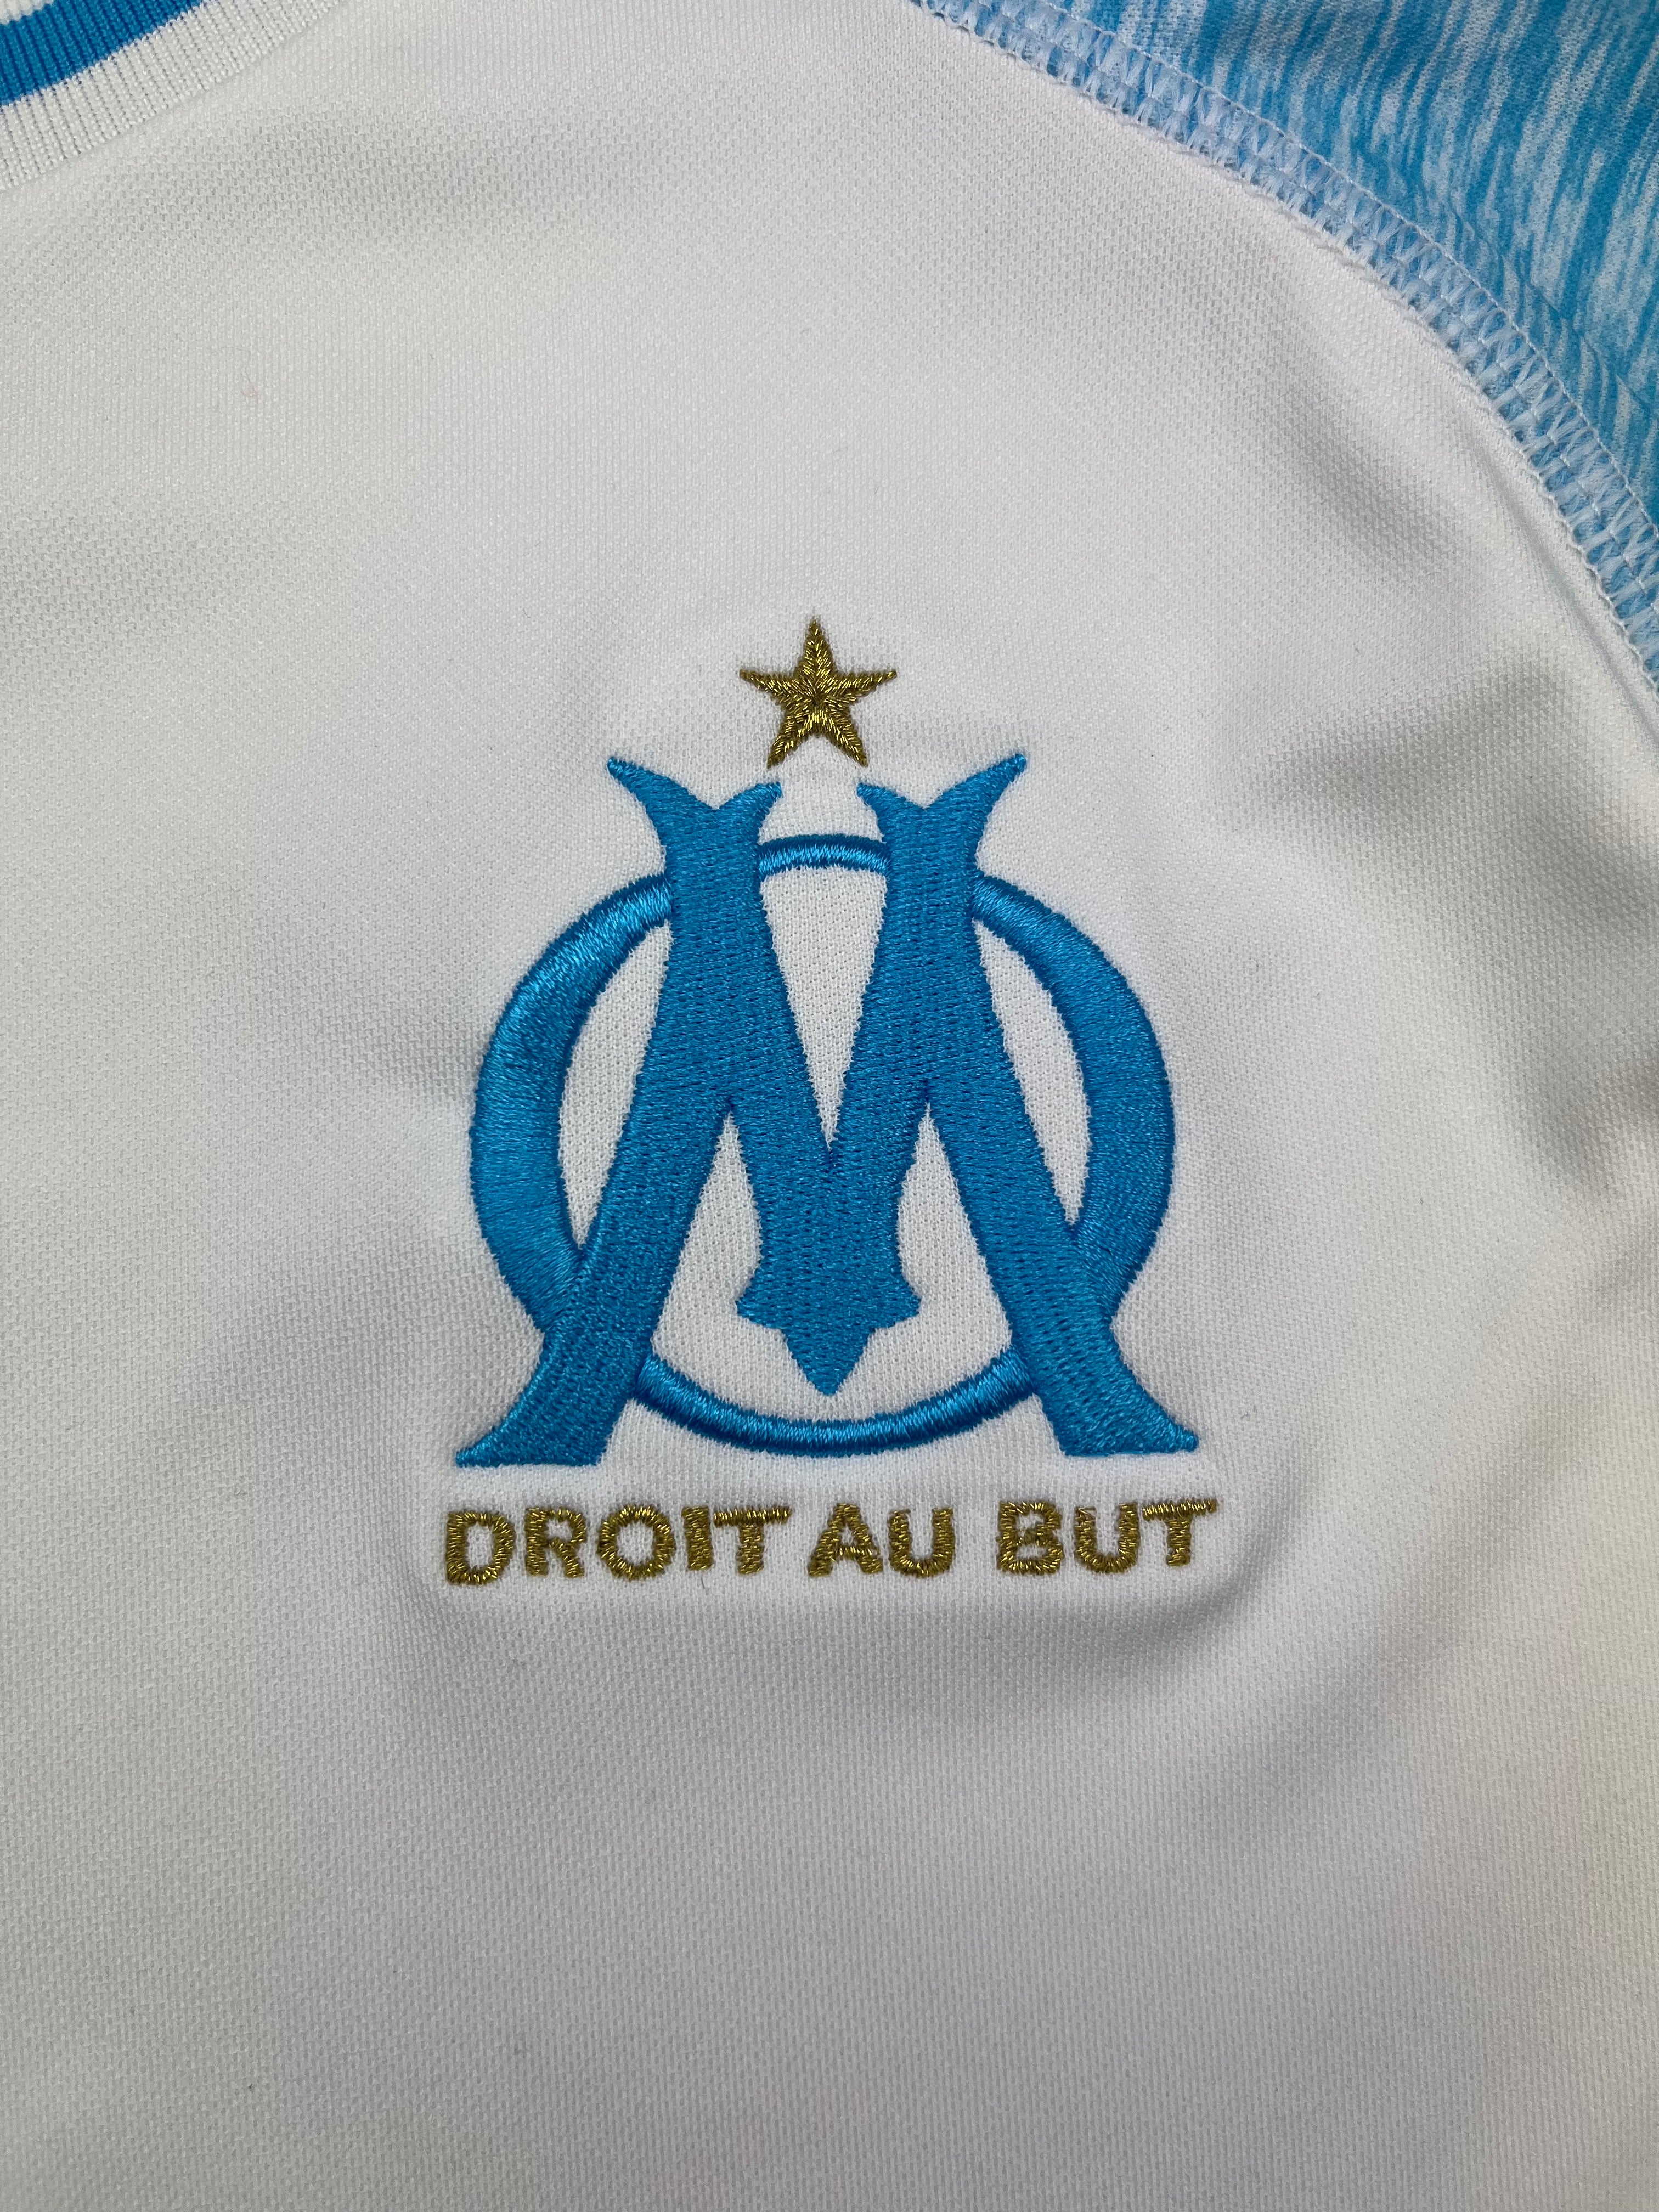 2018/19 Marseille Home Shirt (S) 9/10